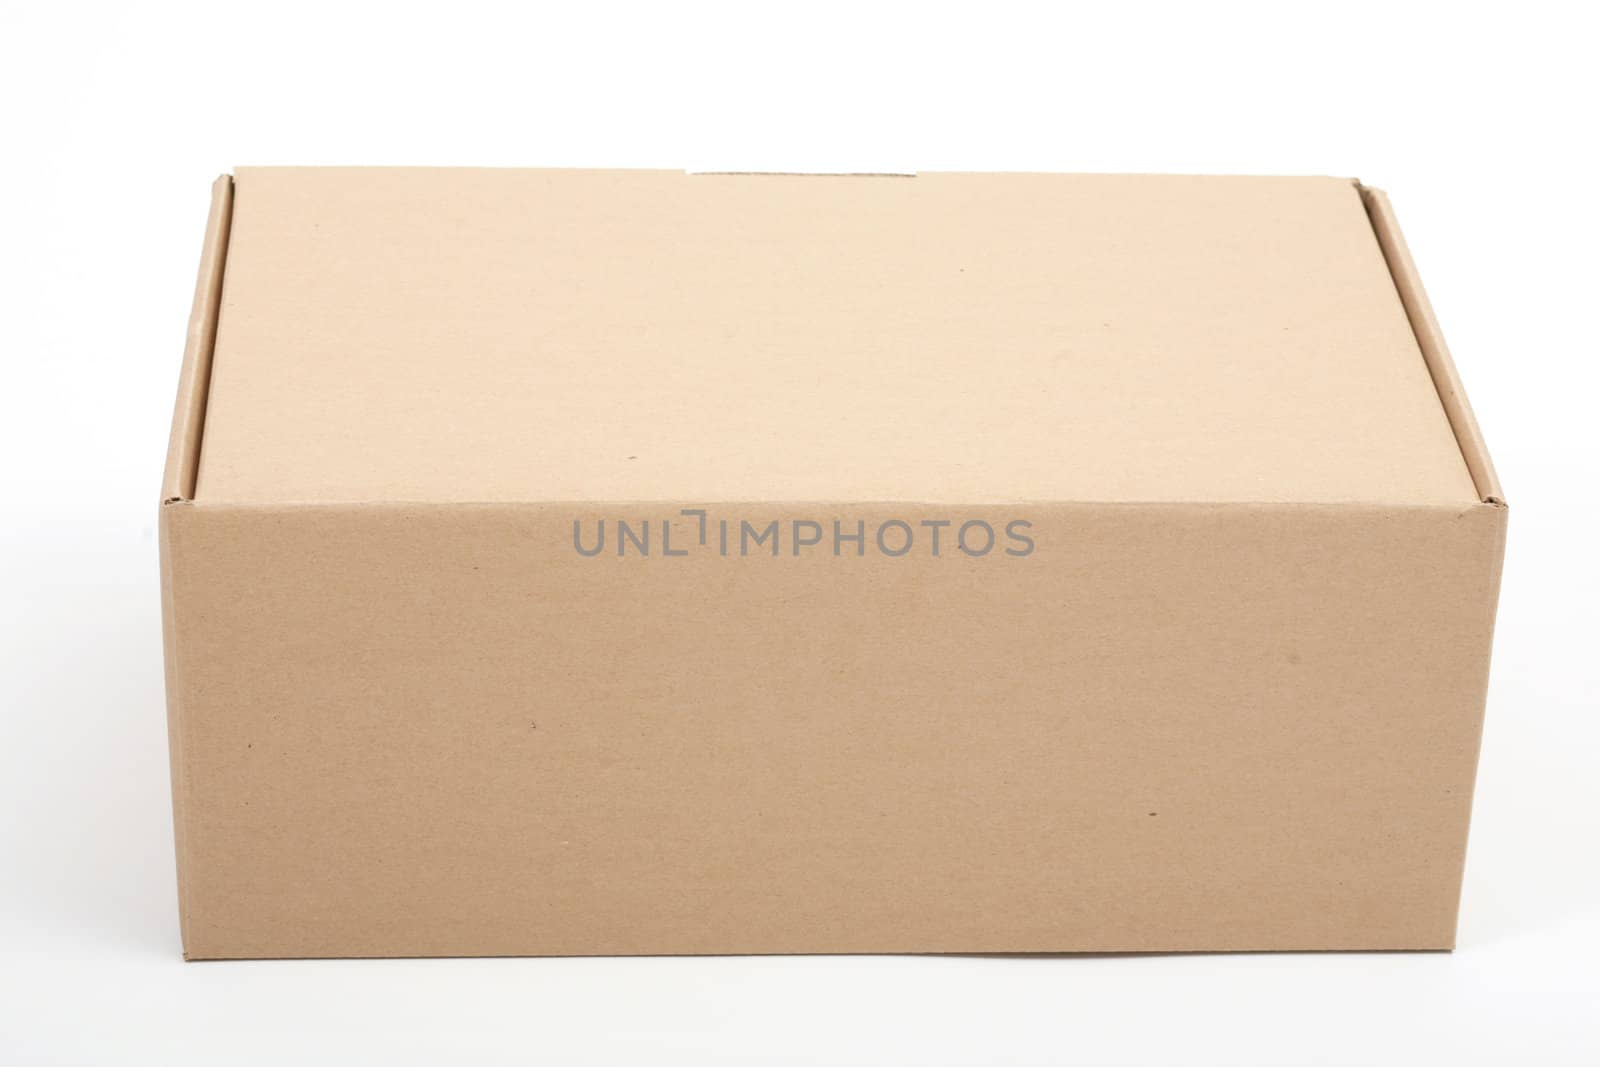 An image of a brown cardboard box